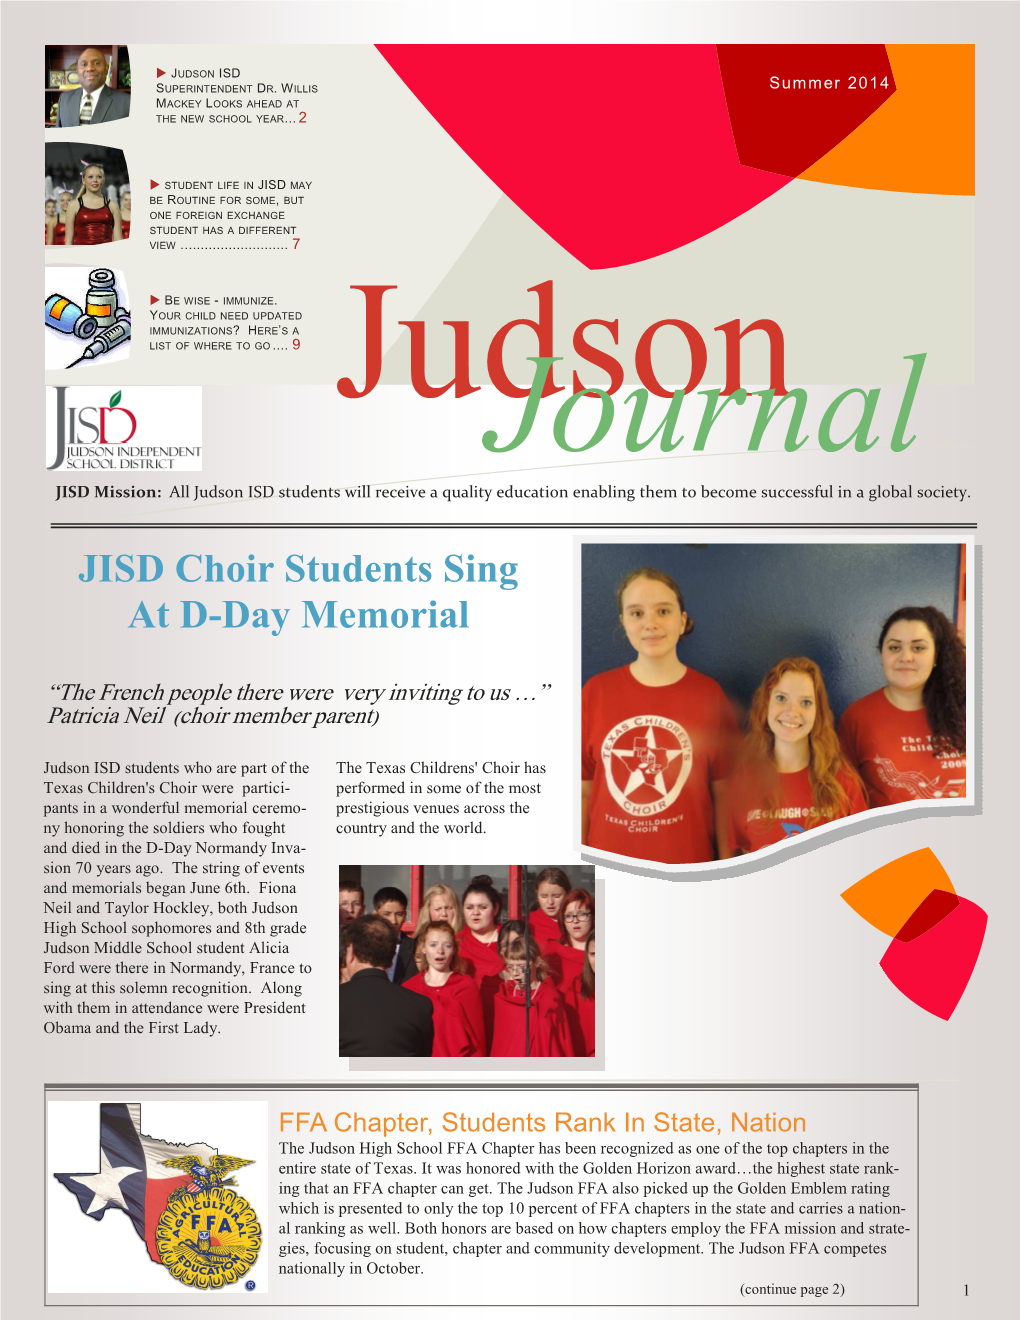 JISD Choir Students Sing at D-Day Memorial